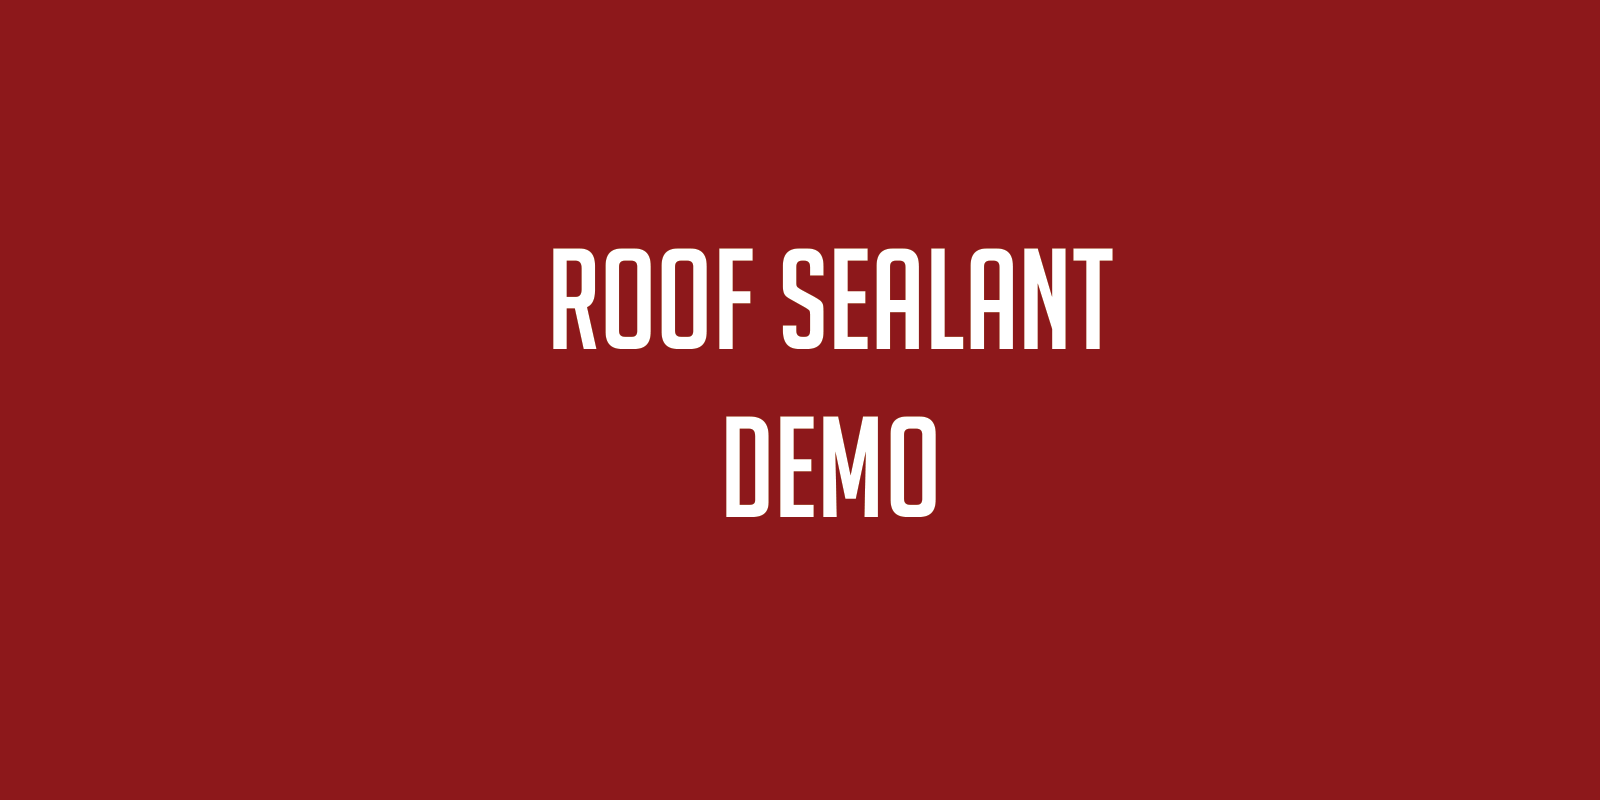  Roof Sealant